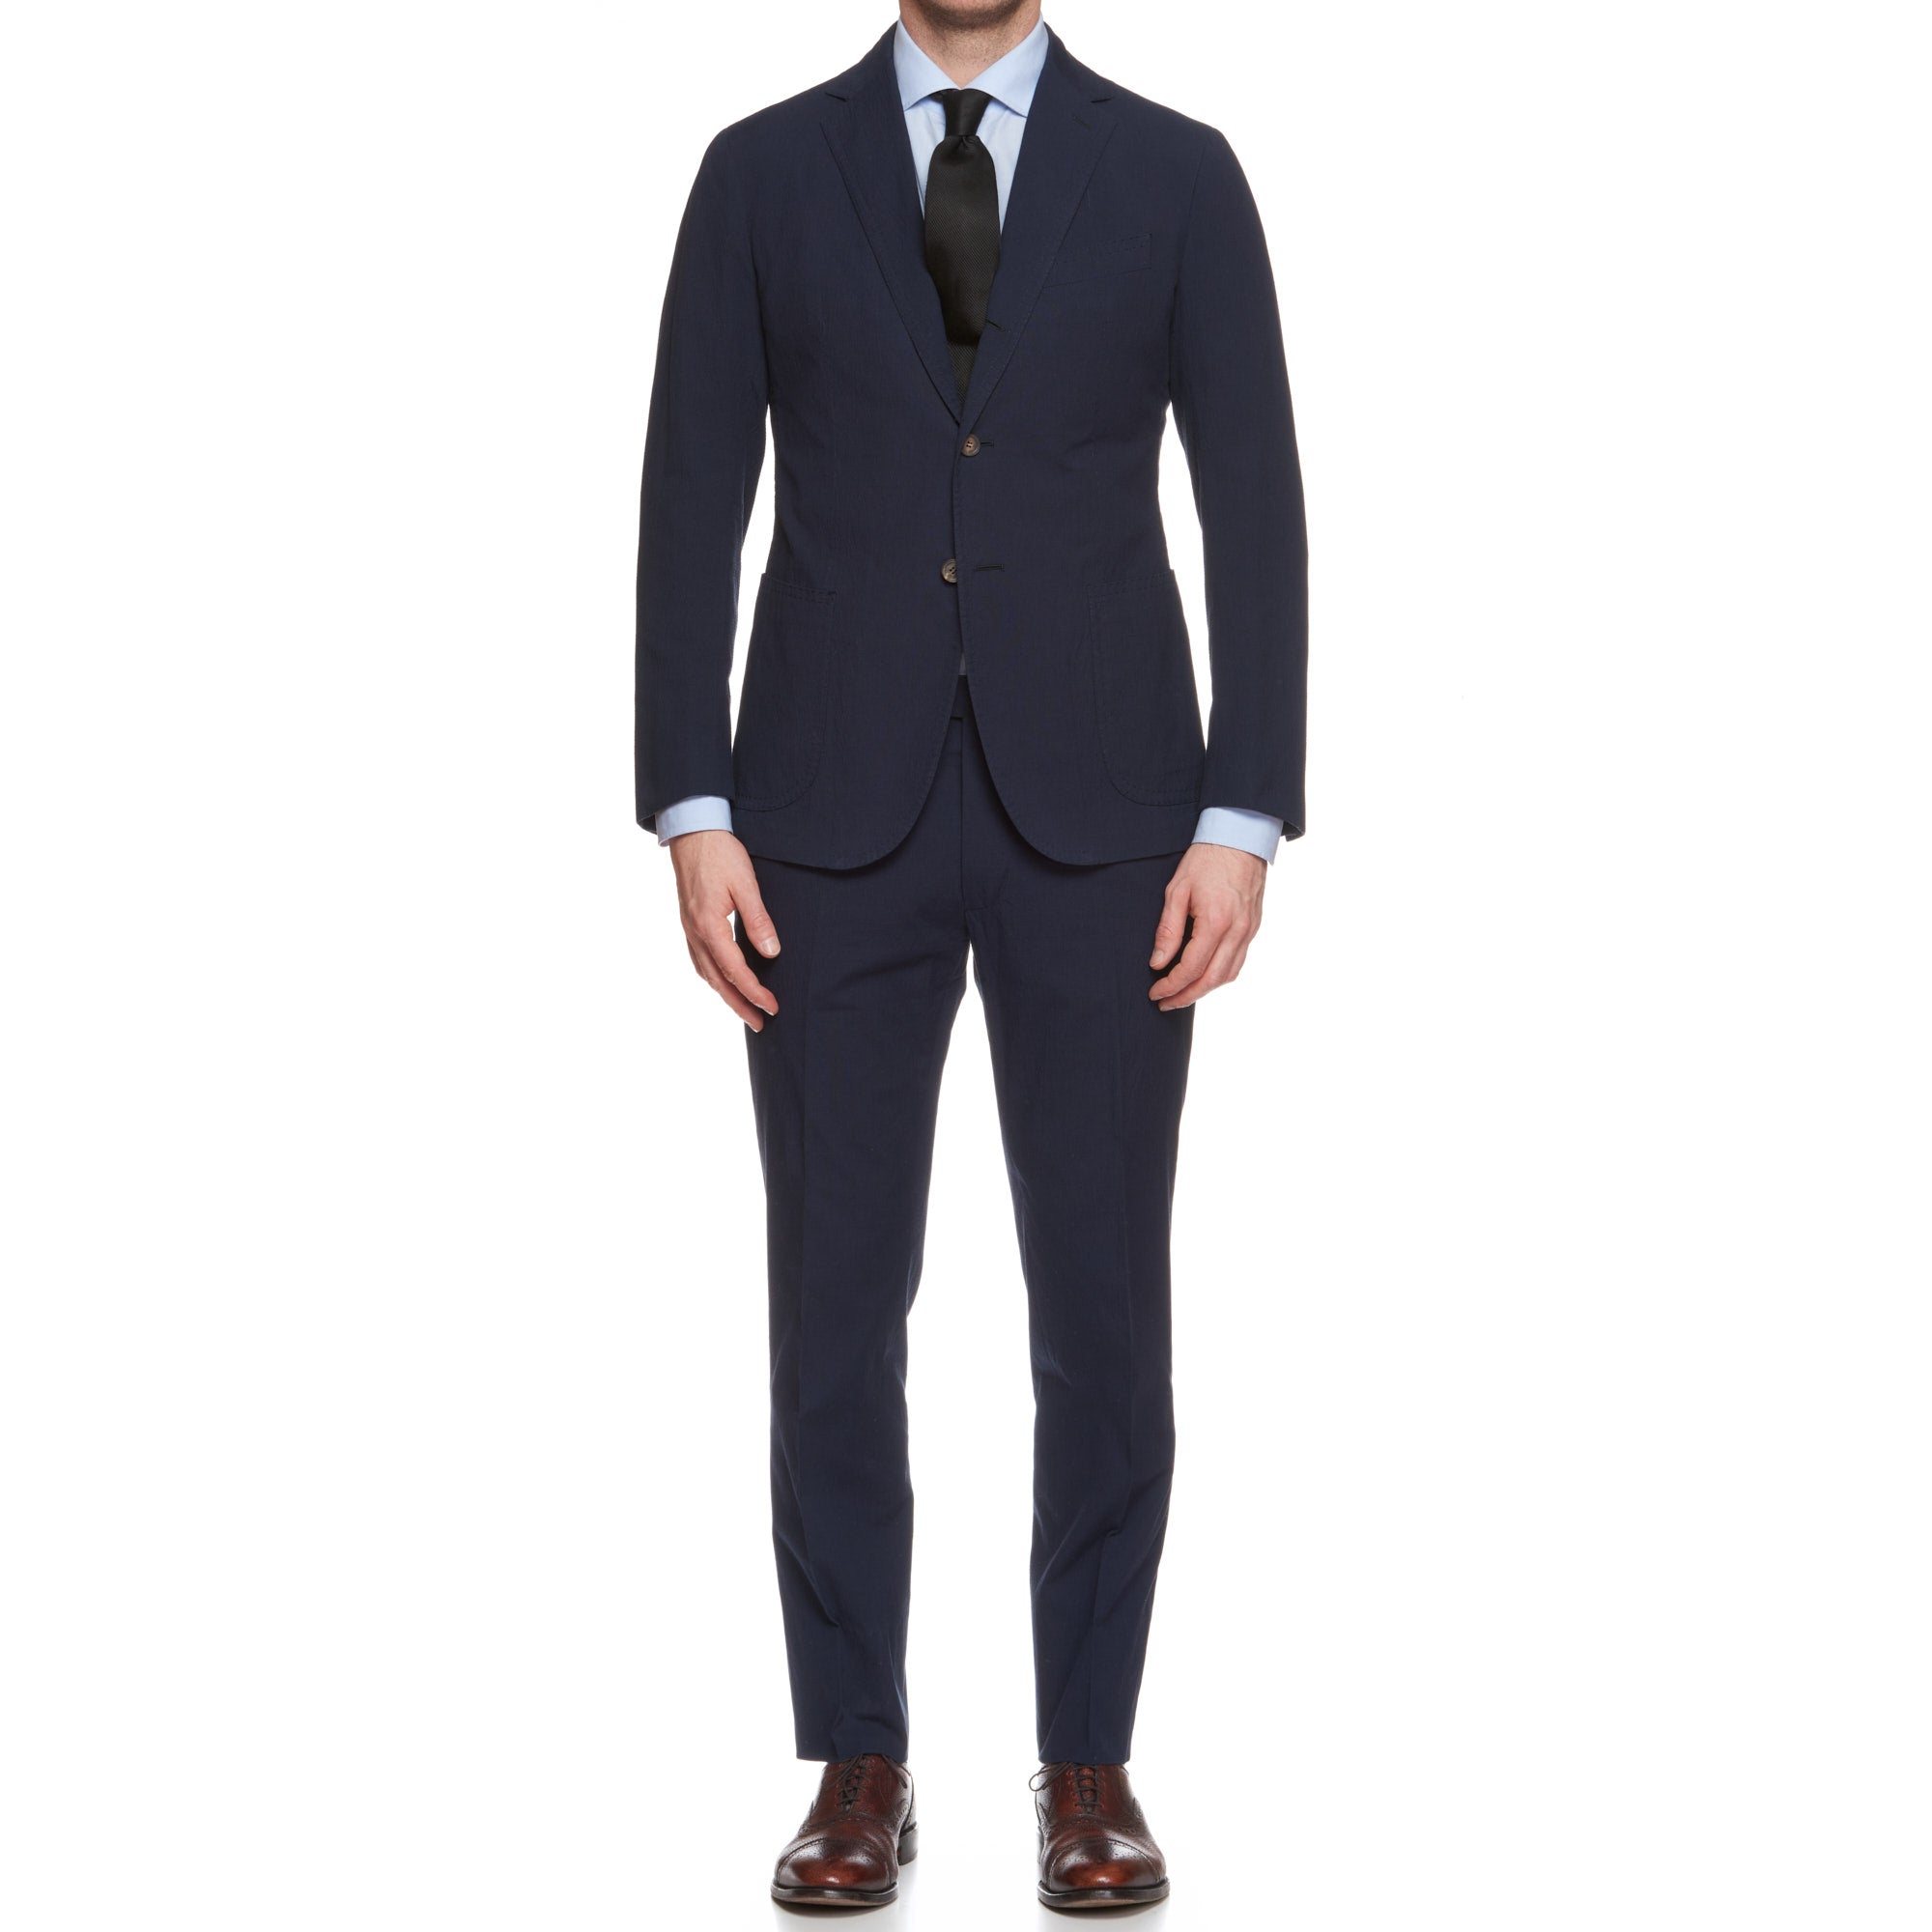 STILE LATINO Napoli Navy Blue Cotton Seersucker Spring-Summer Suit 48